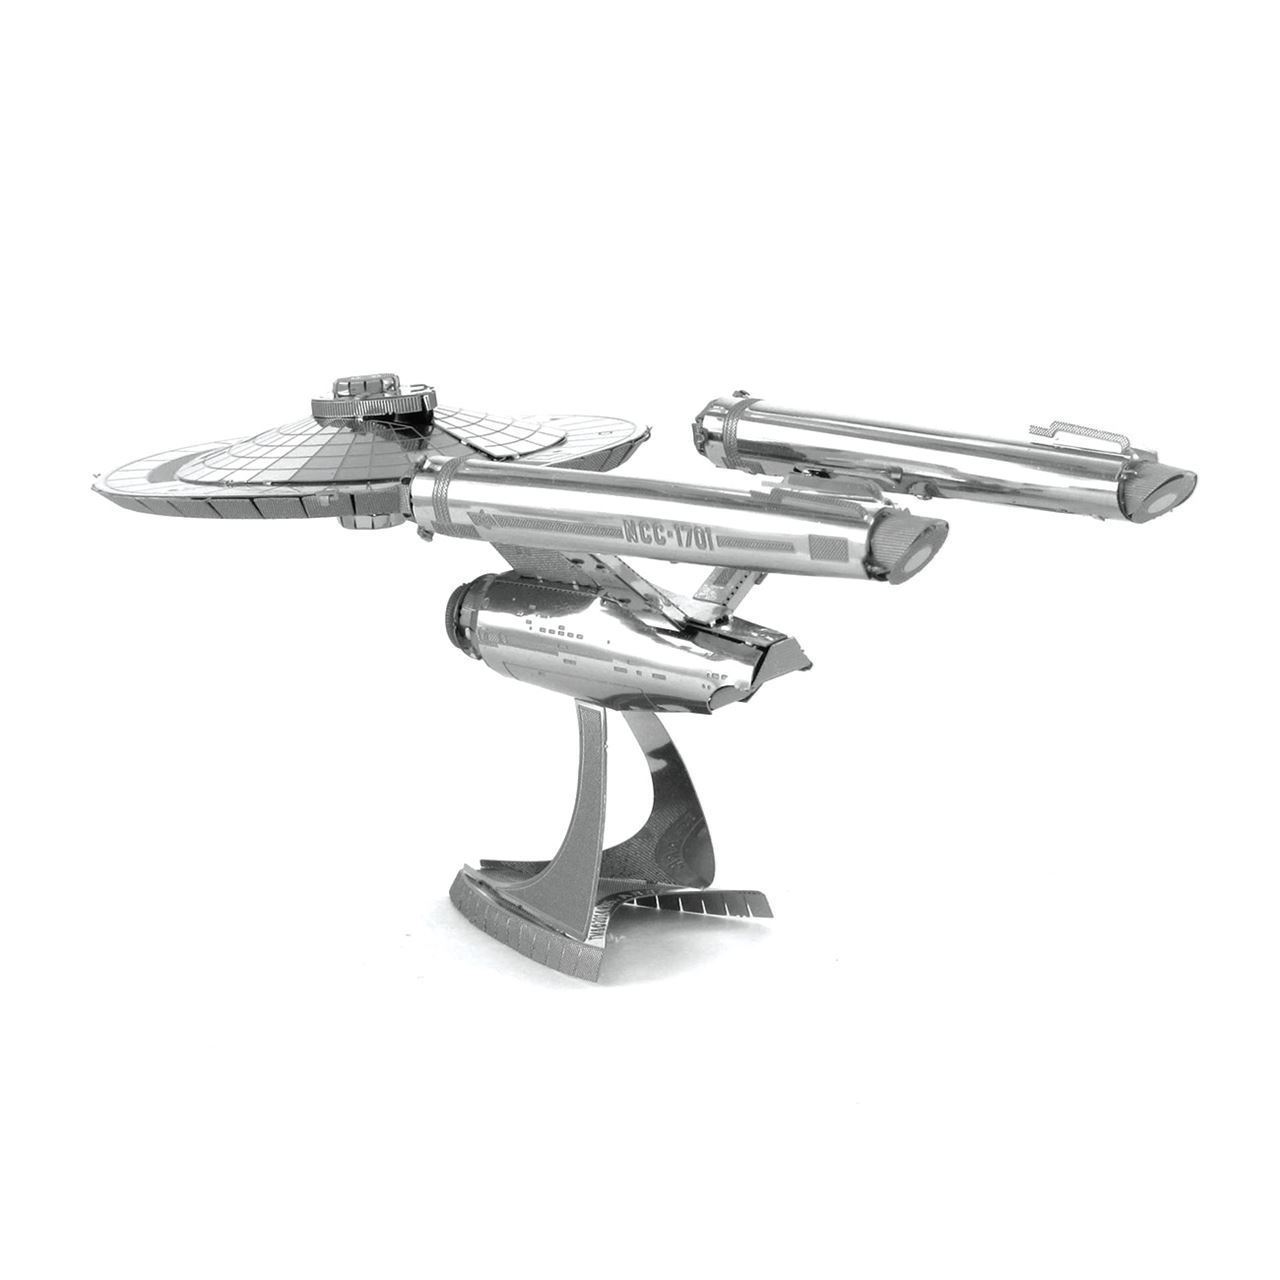 ENTERPRISE NCC-1701 3D Model Fascinations Metal Earth Licensed Star Trek U.S.S 